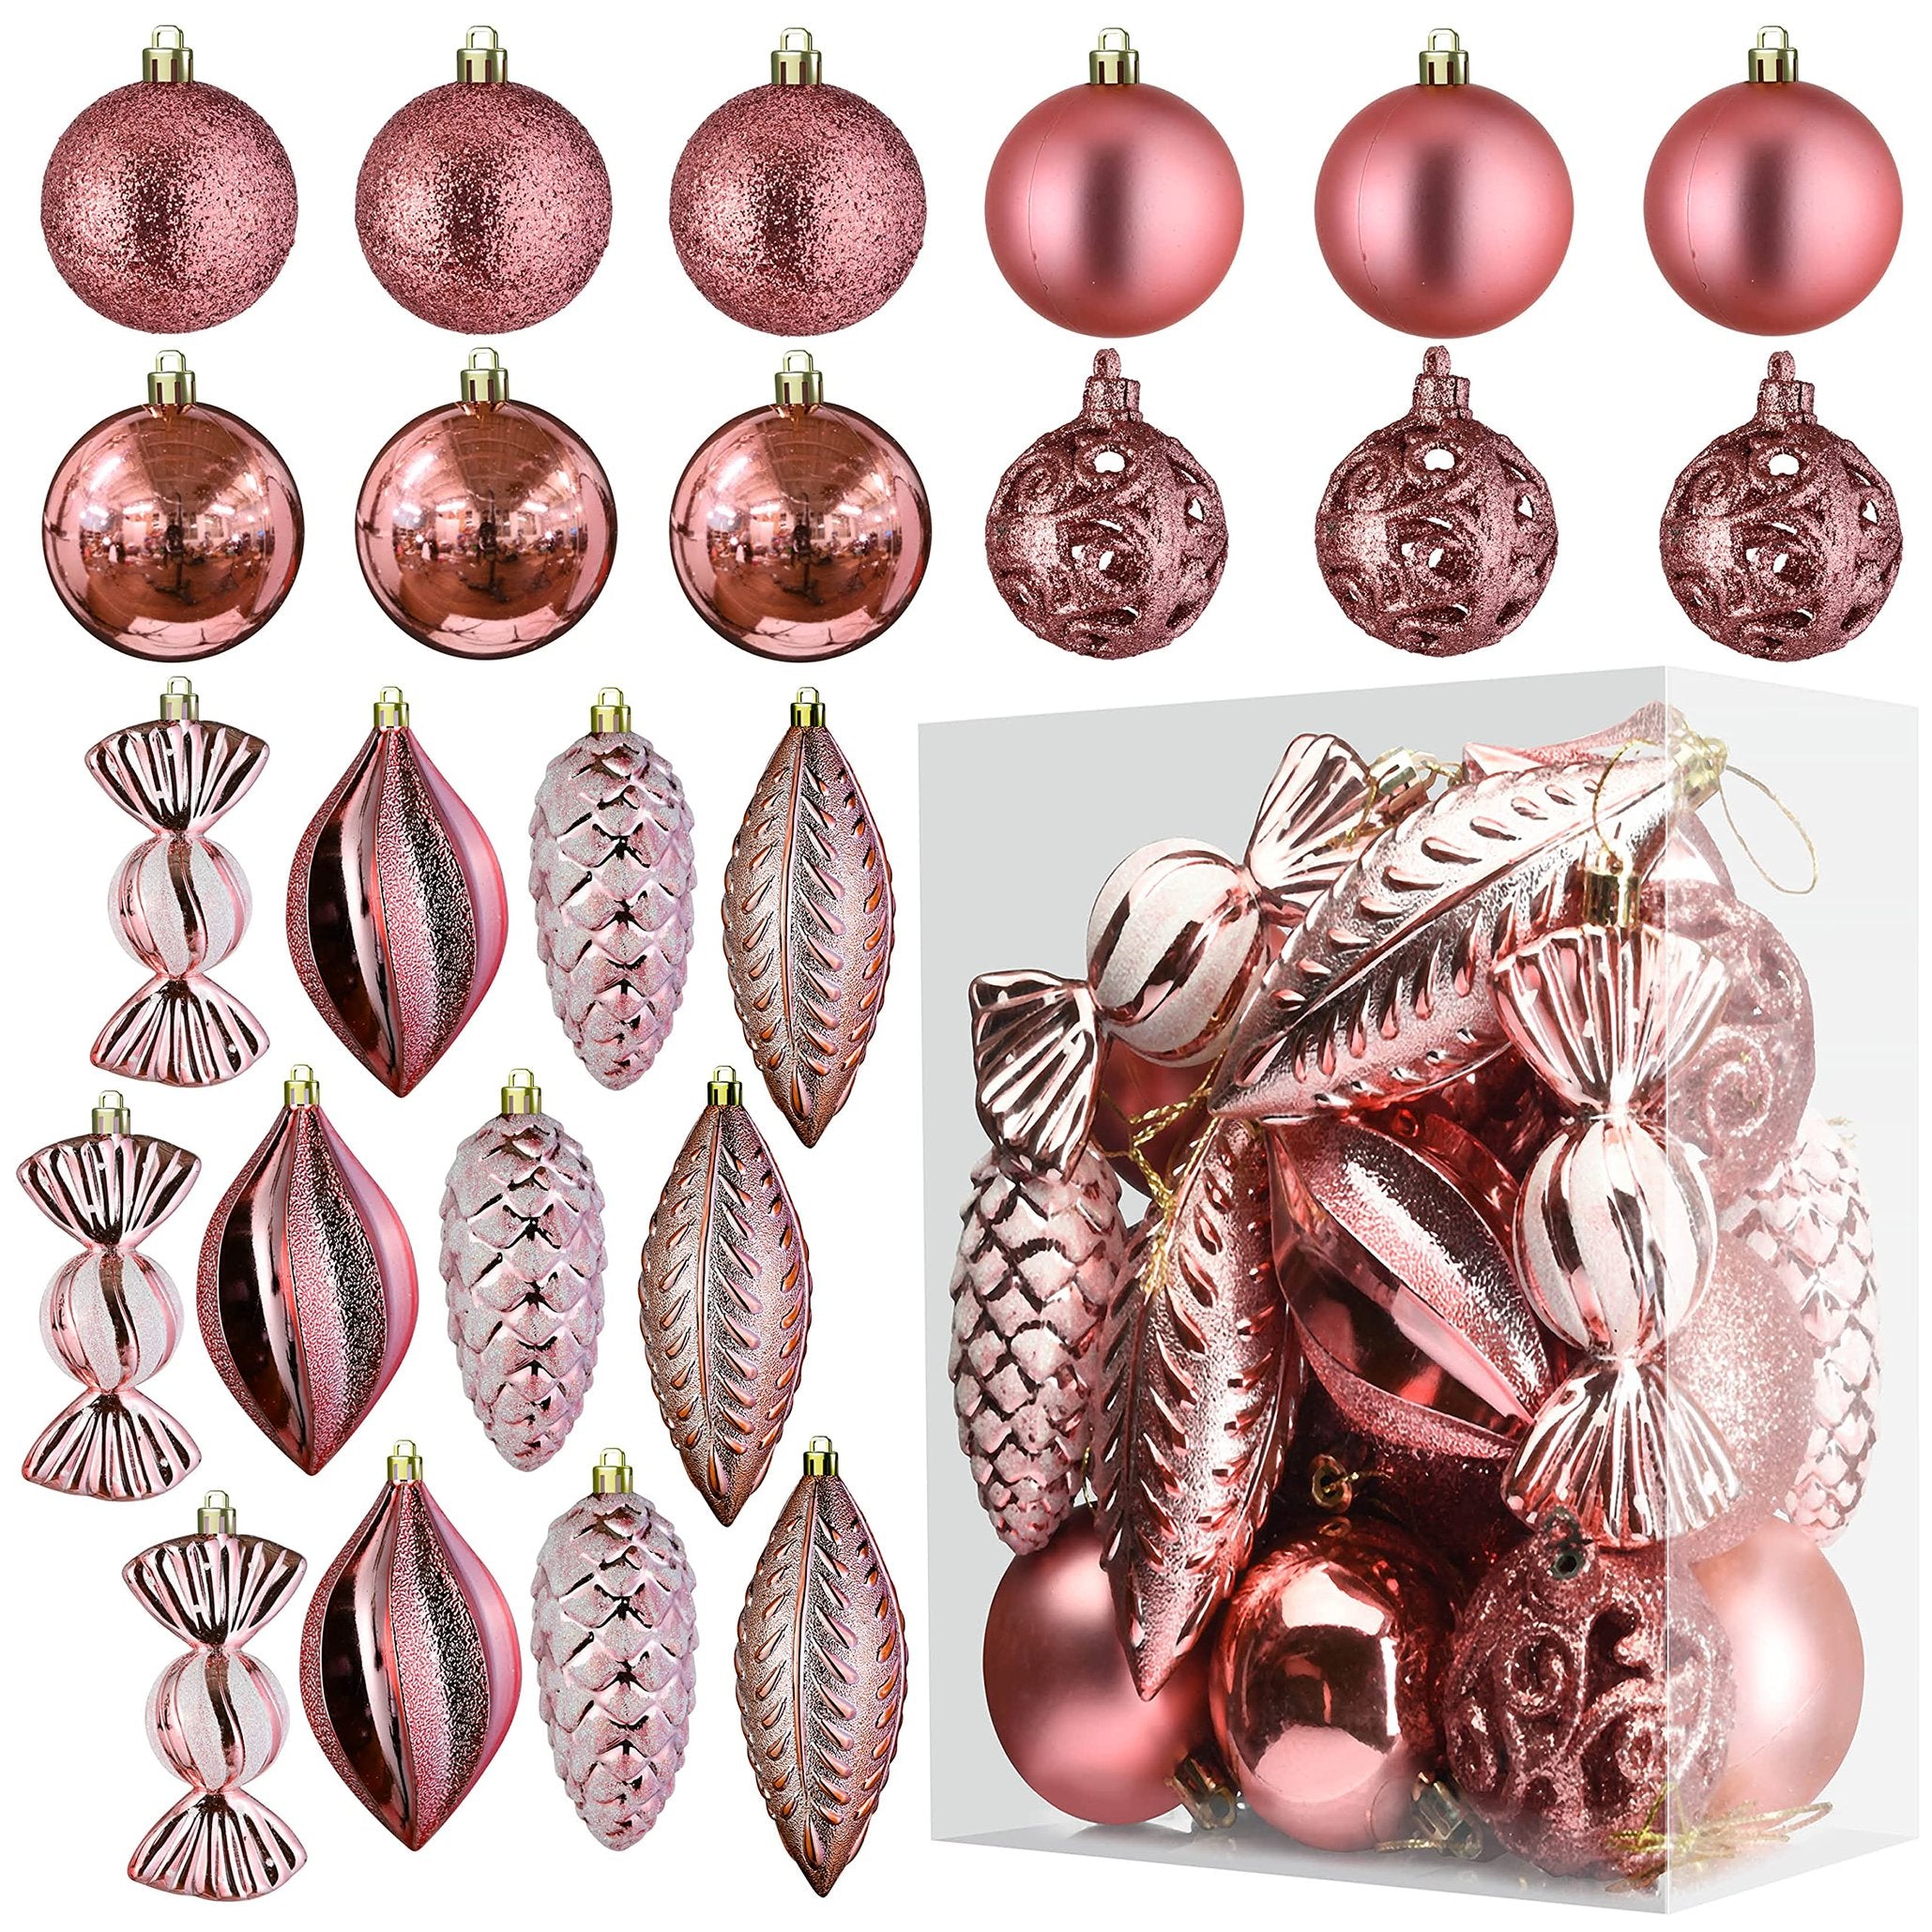 Prextex Rose Gold Christmas Ornaments Set (24pcs) - Shatterproof Balls for Tree, Wreath & Holiday Decor